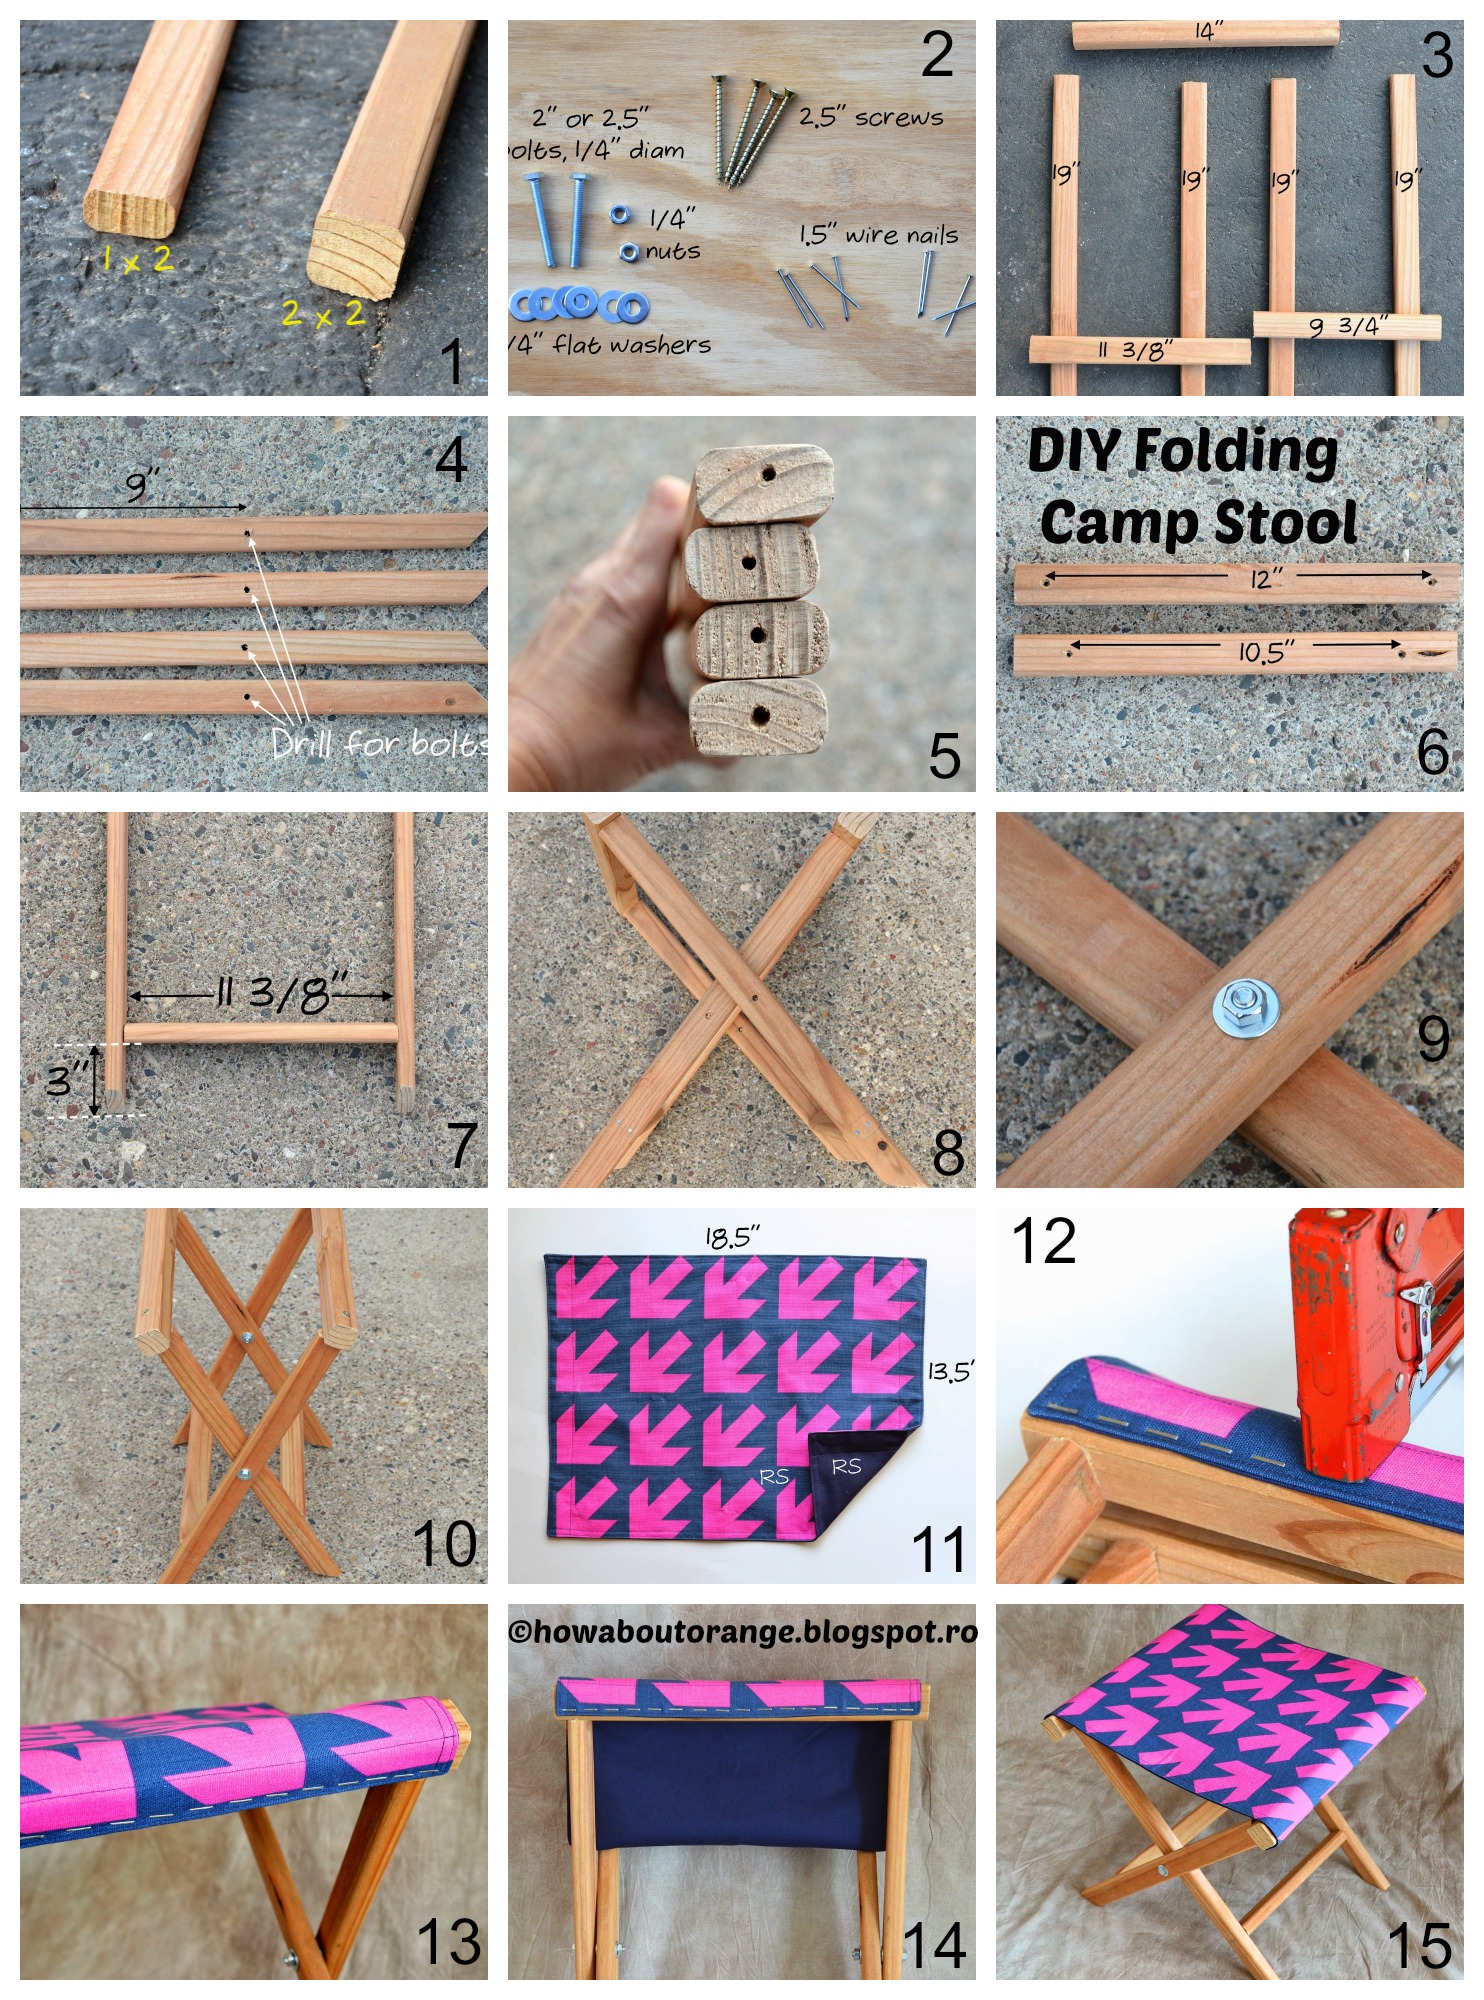 How to make a Folding Camp Stool